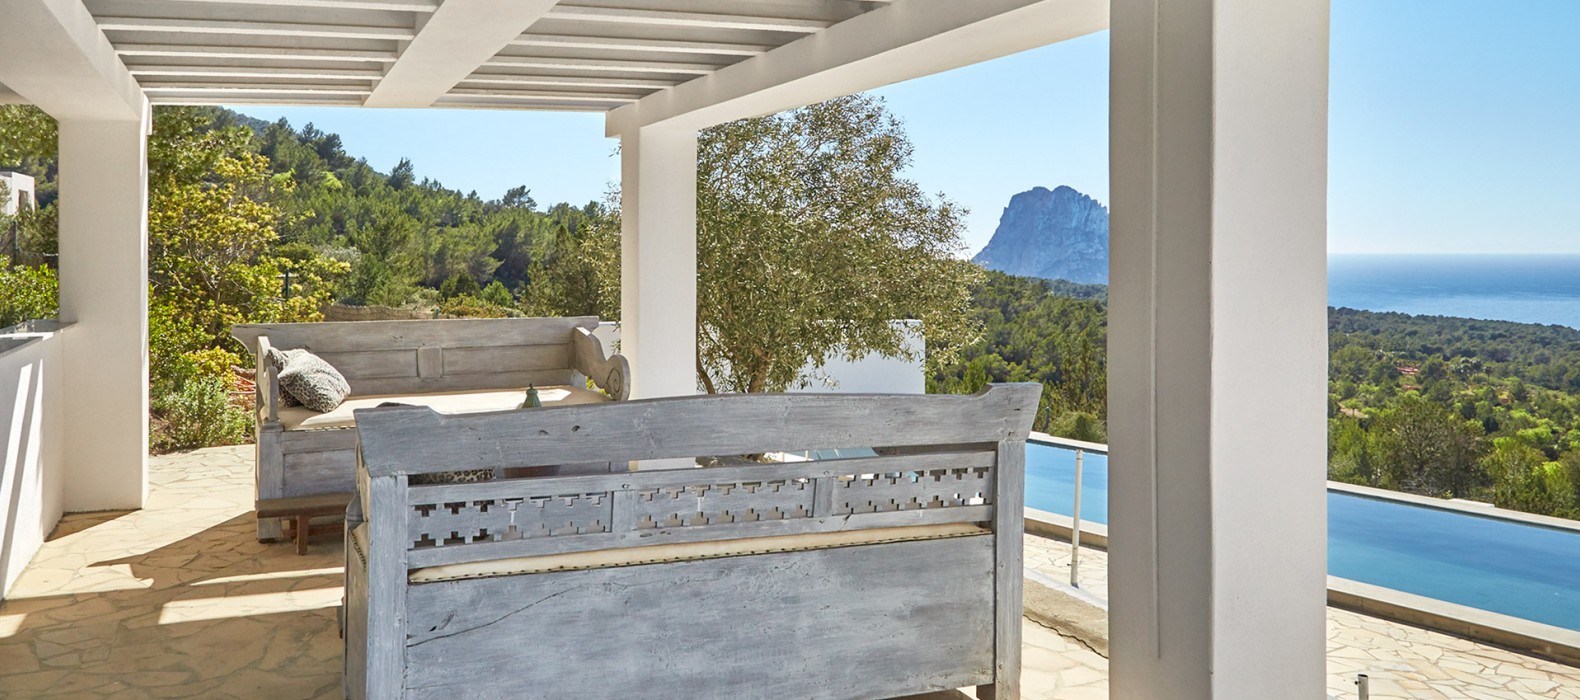 Exterior chill area with Es Vedra view of Villa Monterra in Ibiza